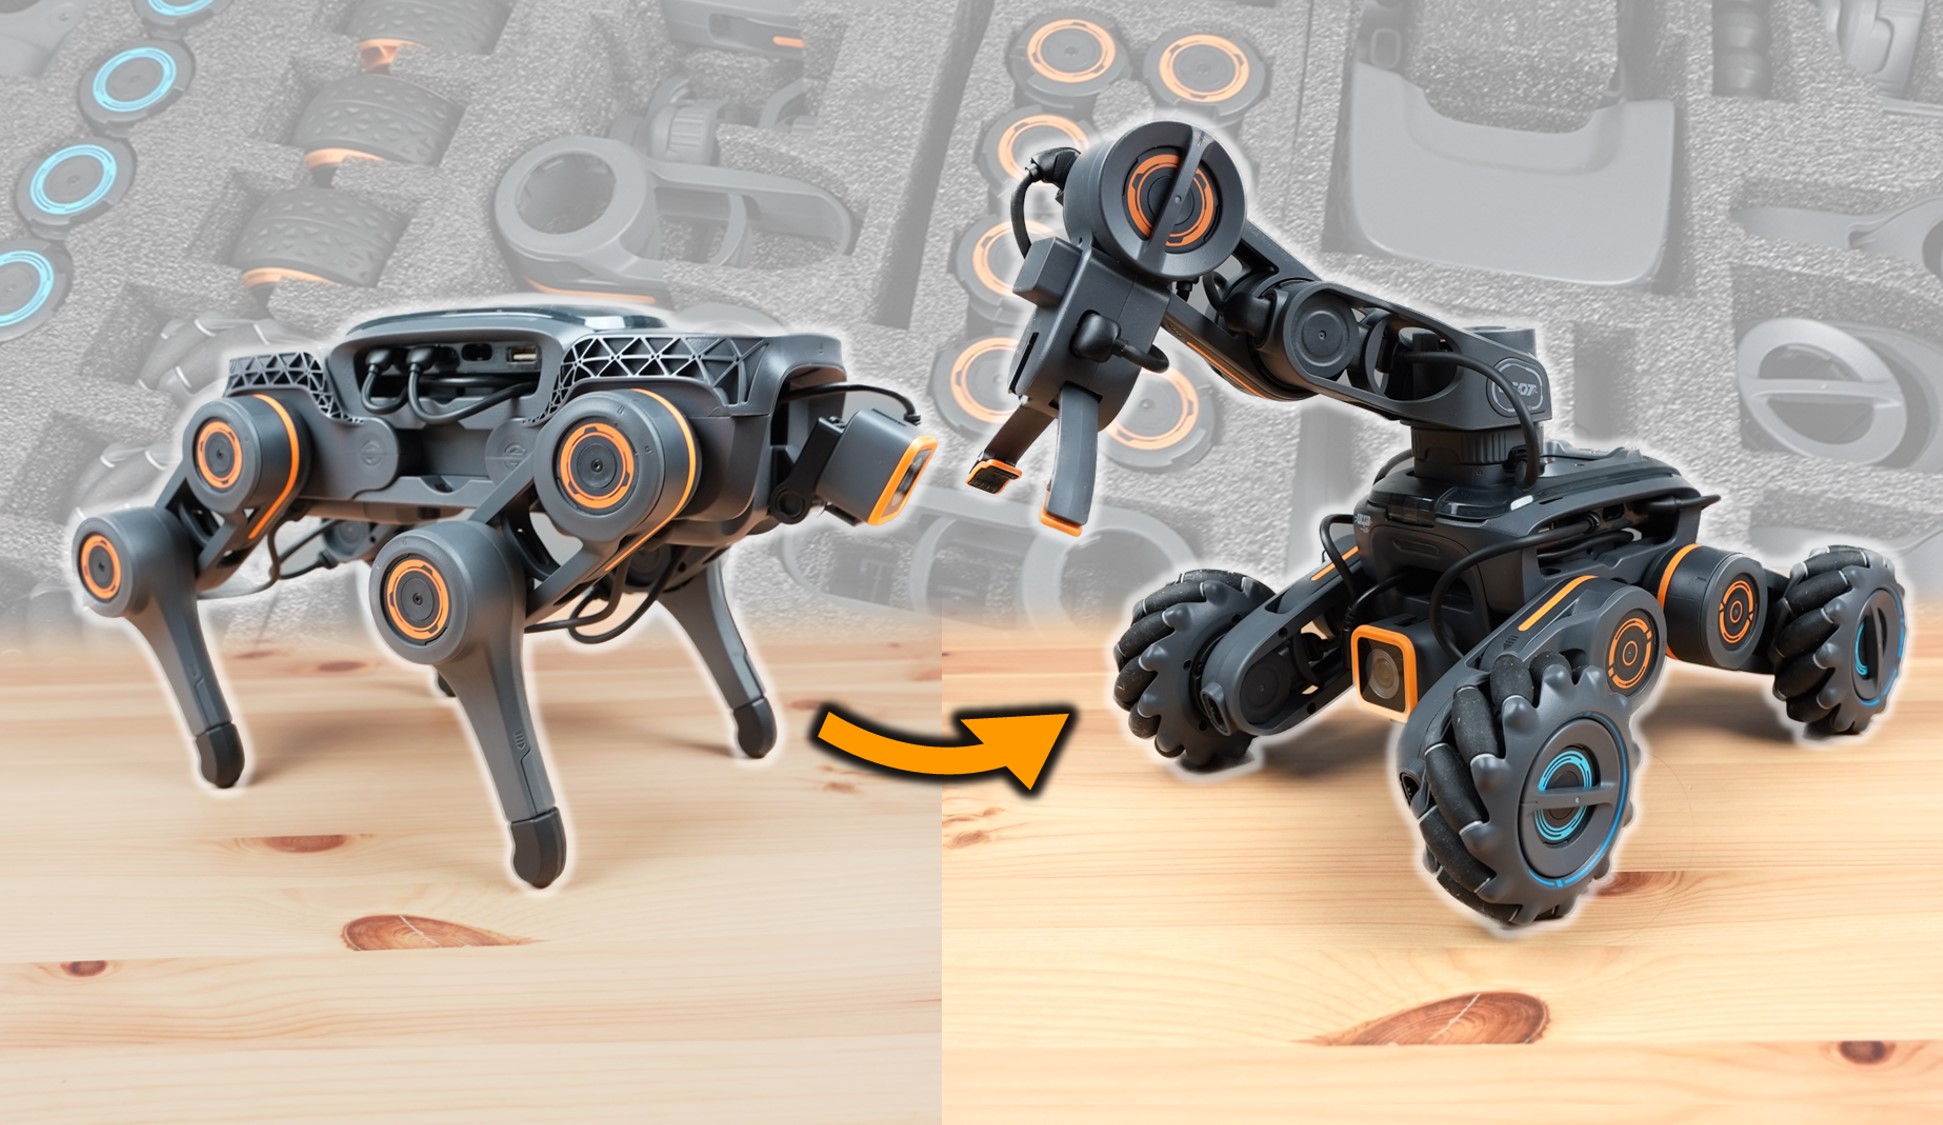 One Kit, 7+ Robot Options - UGOT Modular Robotics Kit